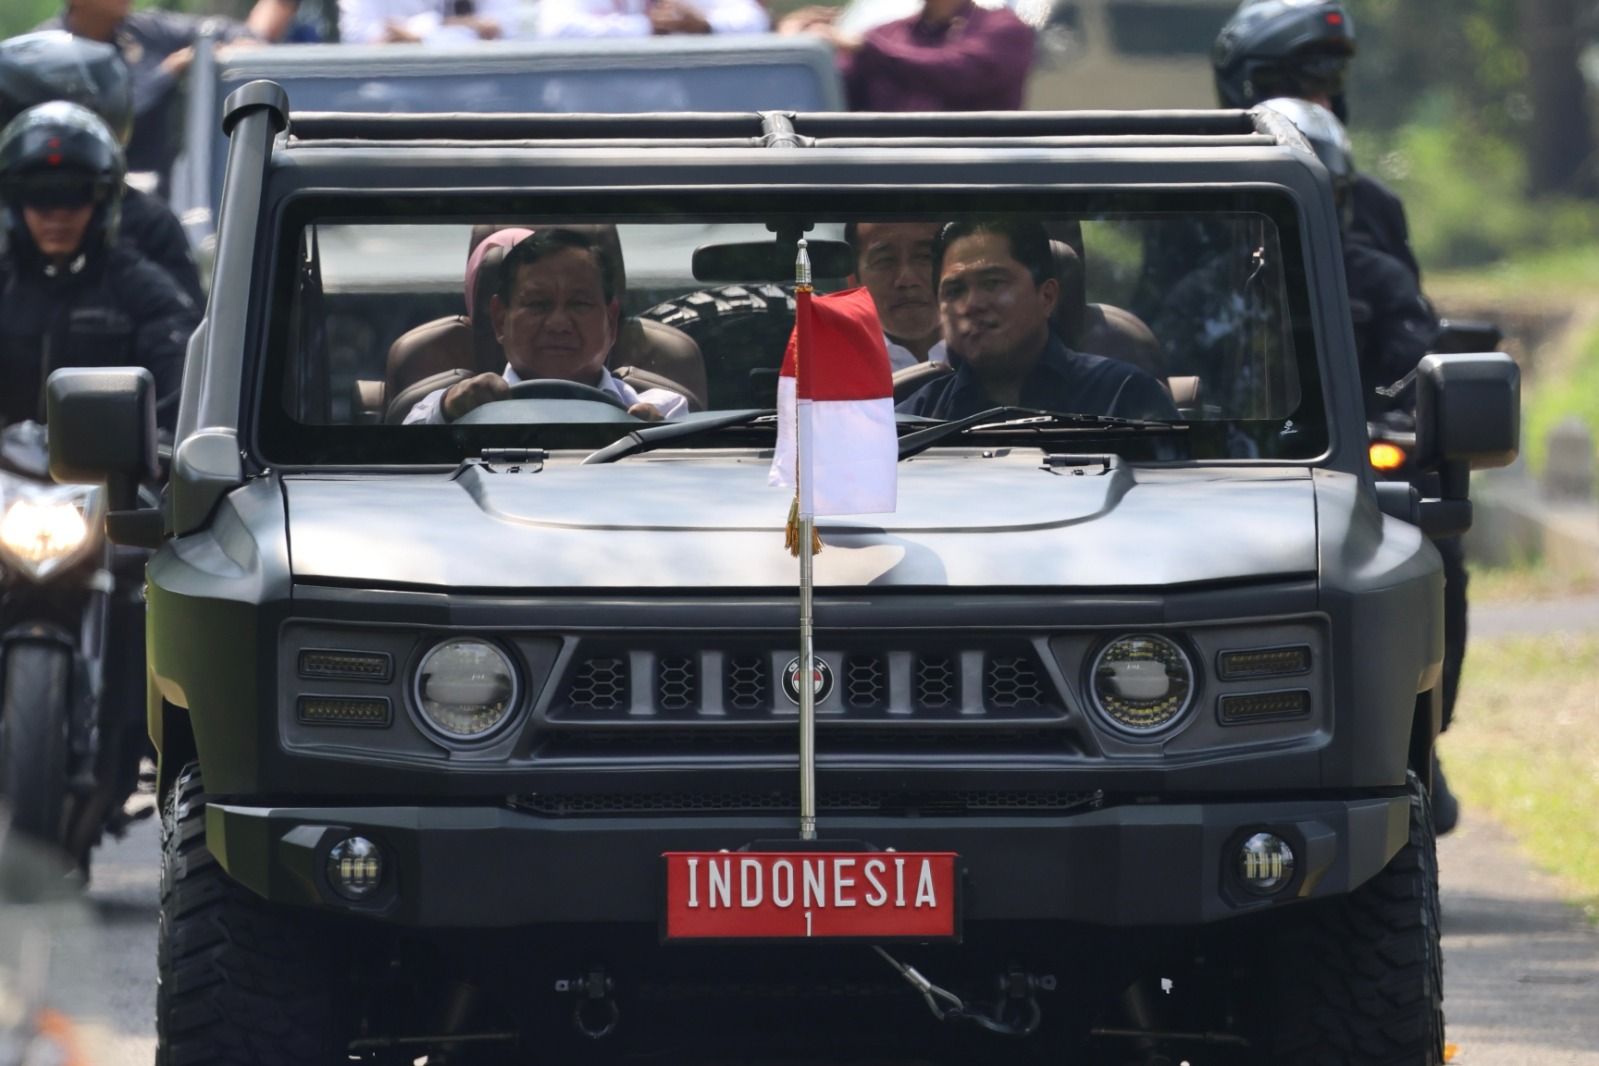 Spesifikasi Maung, Mobil yang Ditumpangi Prabowo dan Jokowi di Malang